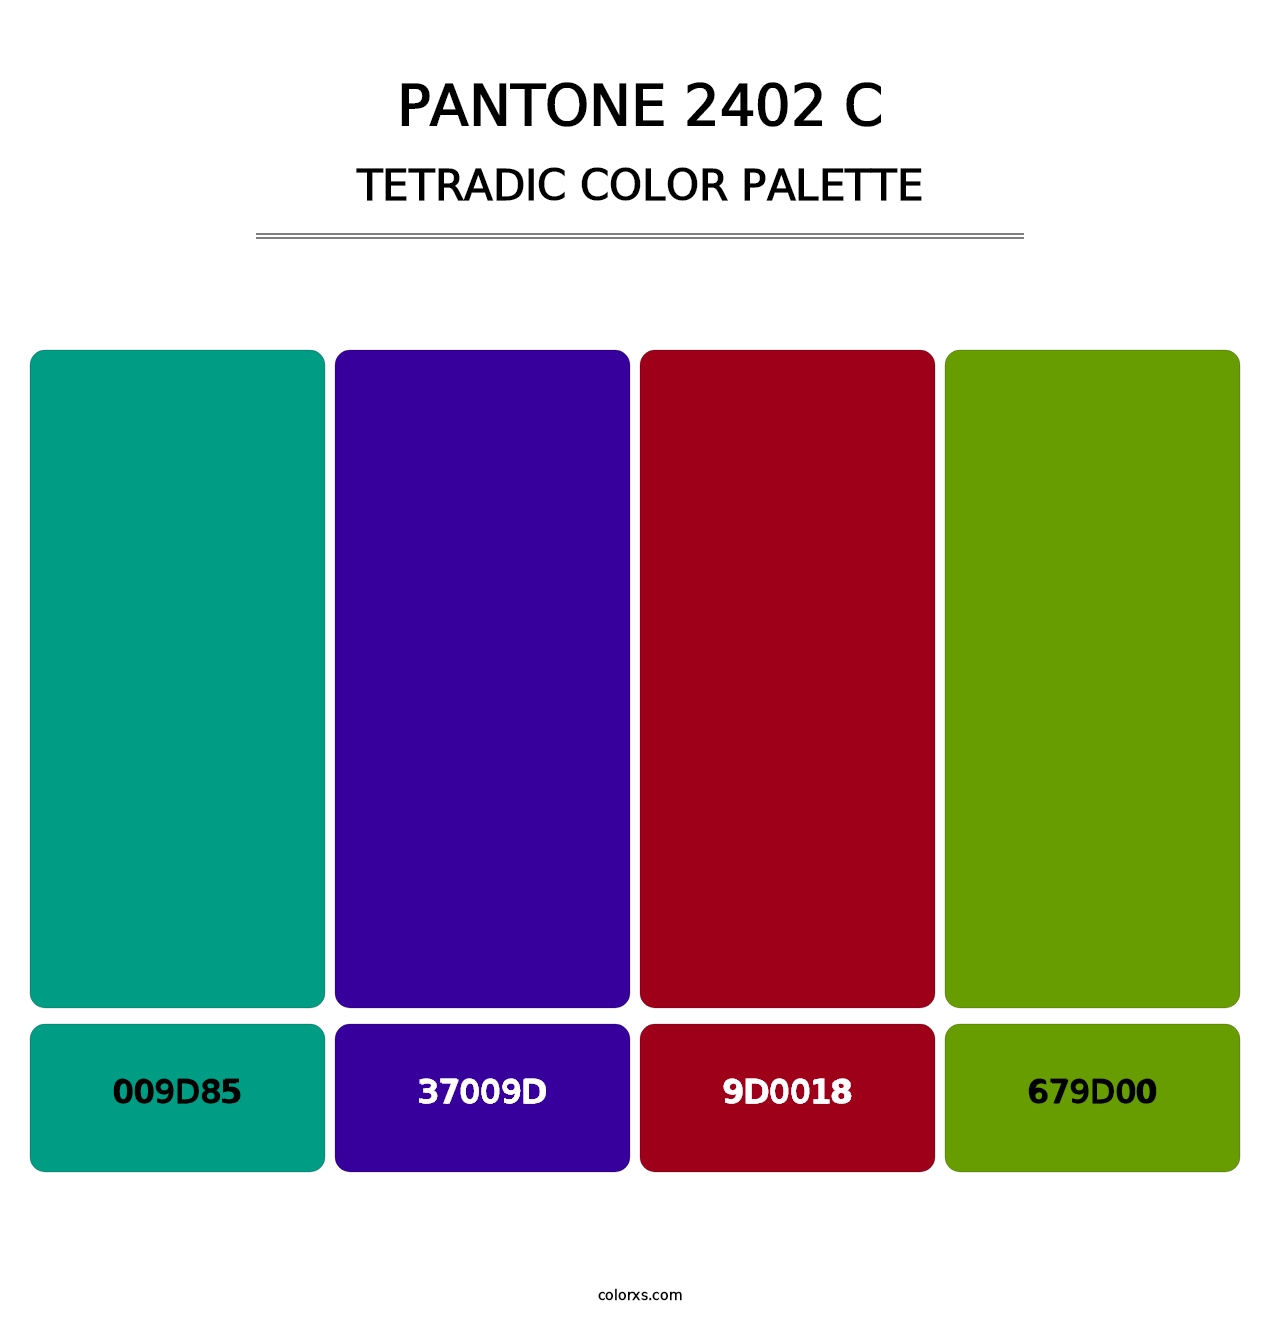 PANTONE 2402 C - Tetradic Color Palette